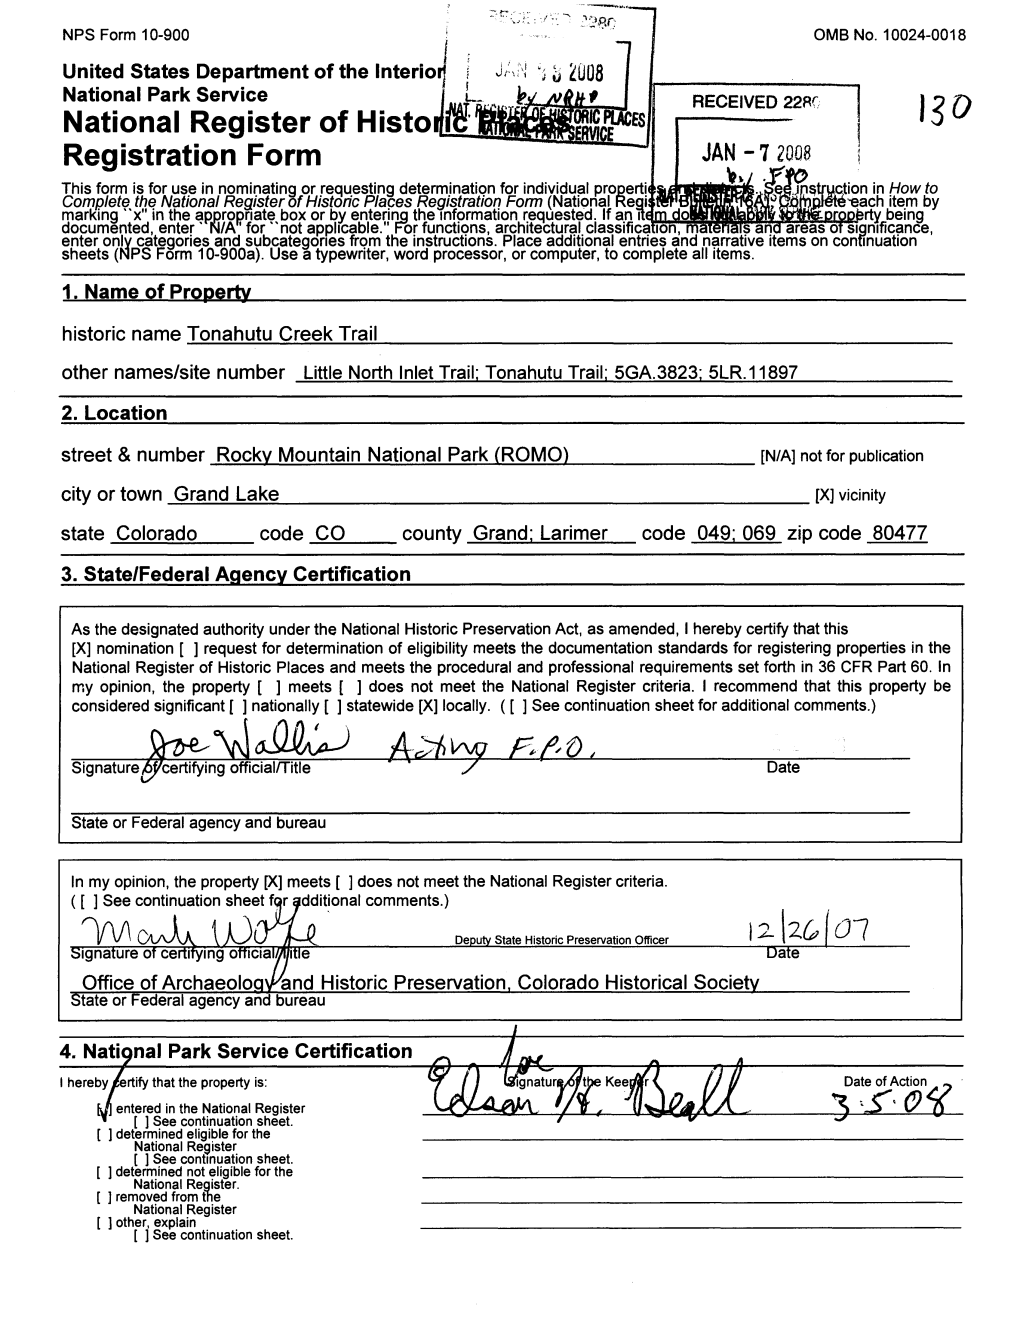 National Register of Histo Registration Form